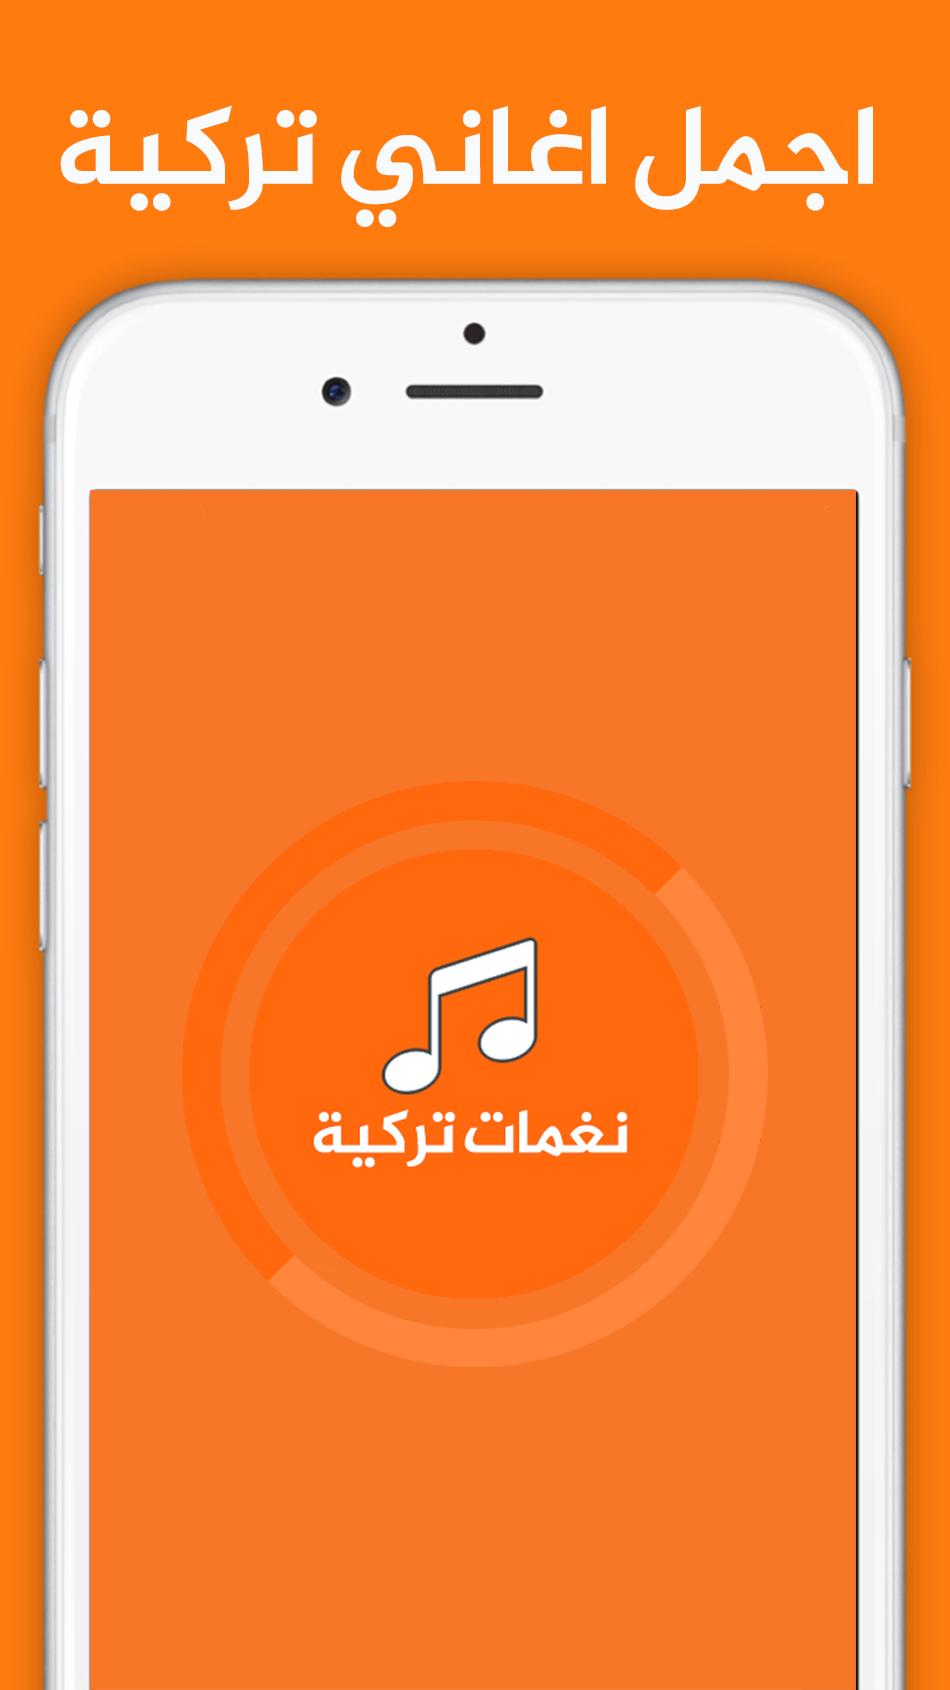 اجمل رنات و نغمات تركية For Android Apk Download